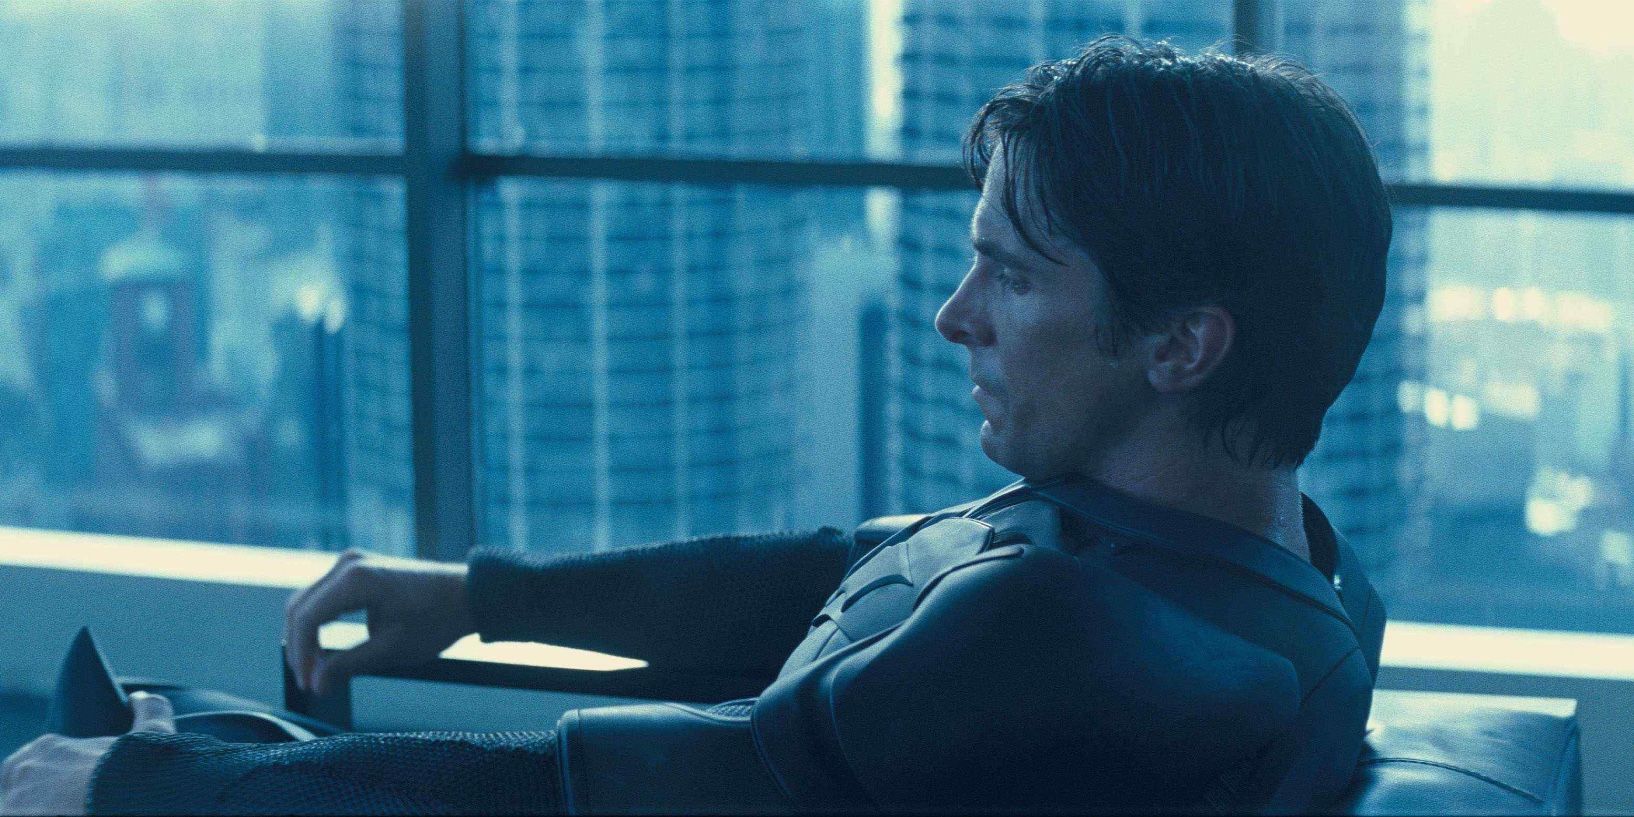 Christian Bale in The Dark Knight